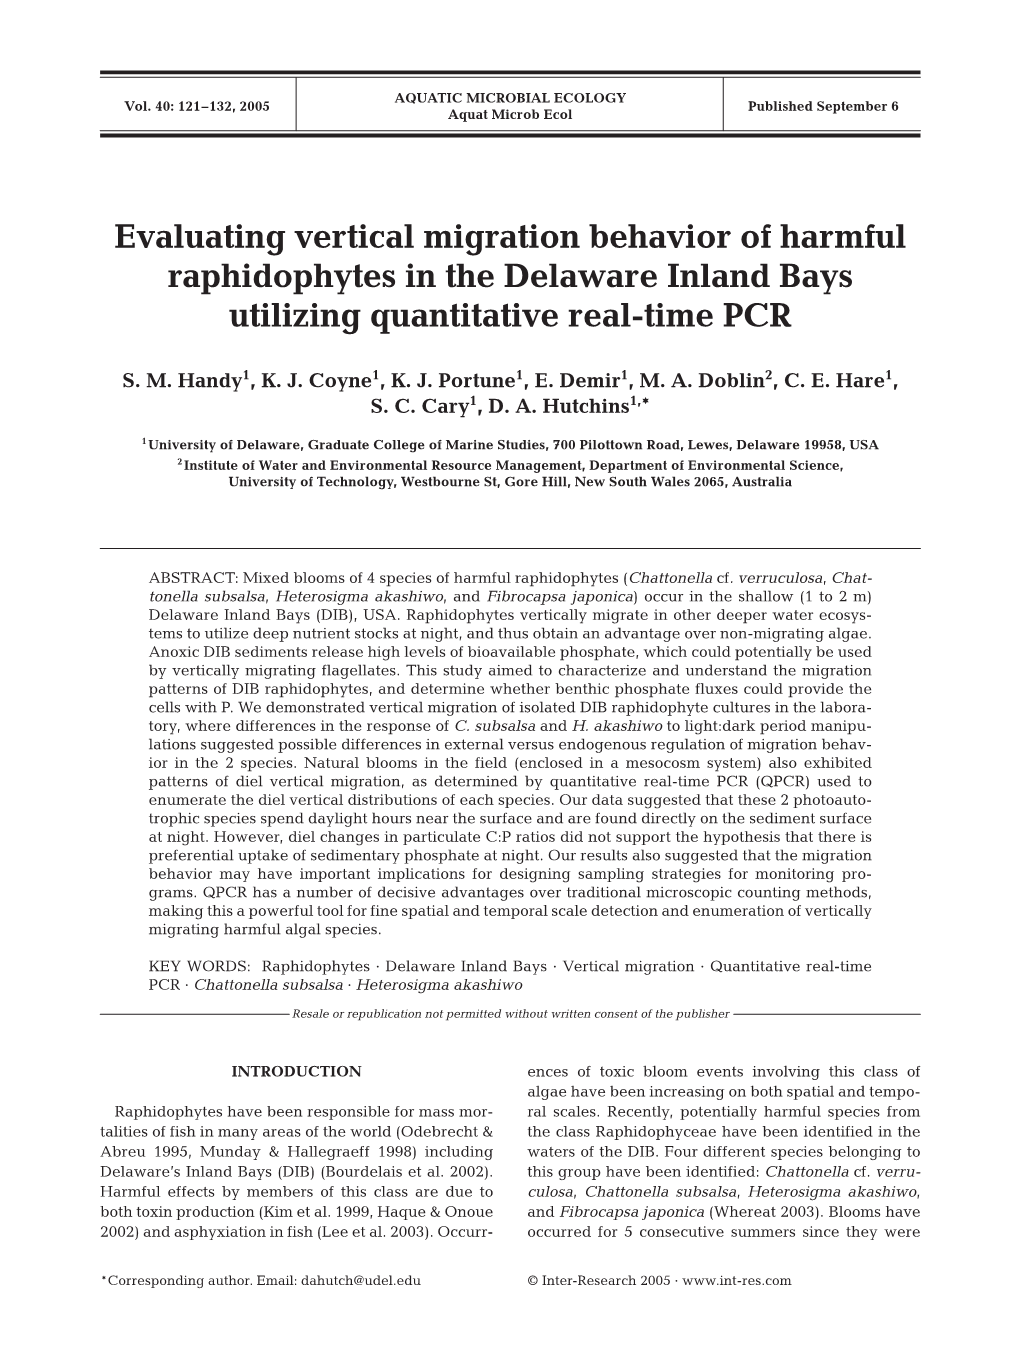 Evaluating Vertical Migration Behavior of Harmful Raphidophytes in the Delaware Inland Bays Utilizing Quantitative Real-Time PCR